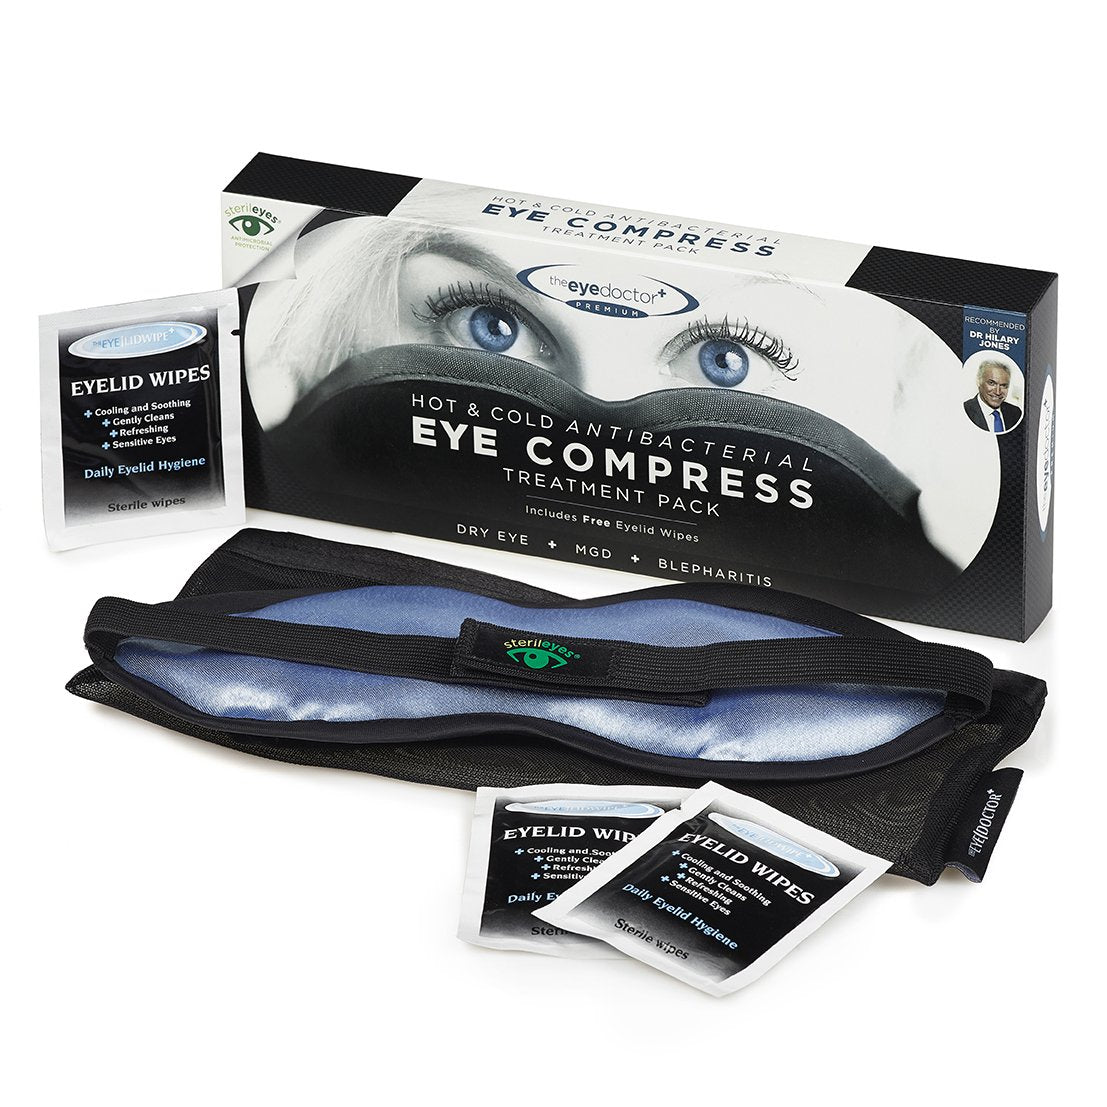 The Eyedoctor+ Dry Eye Premium Moist Heat Compress